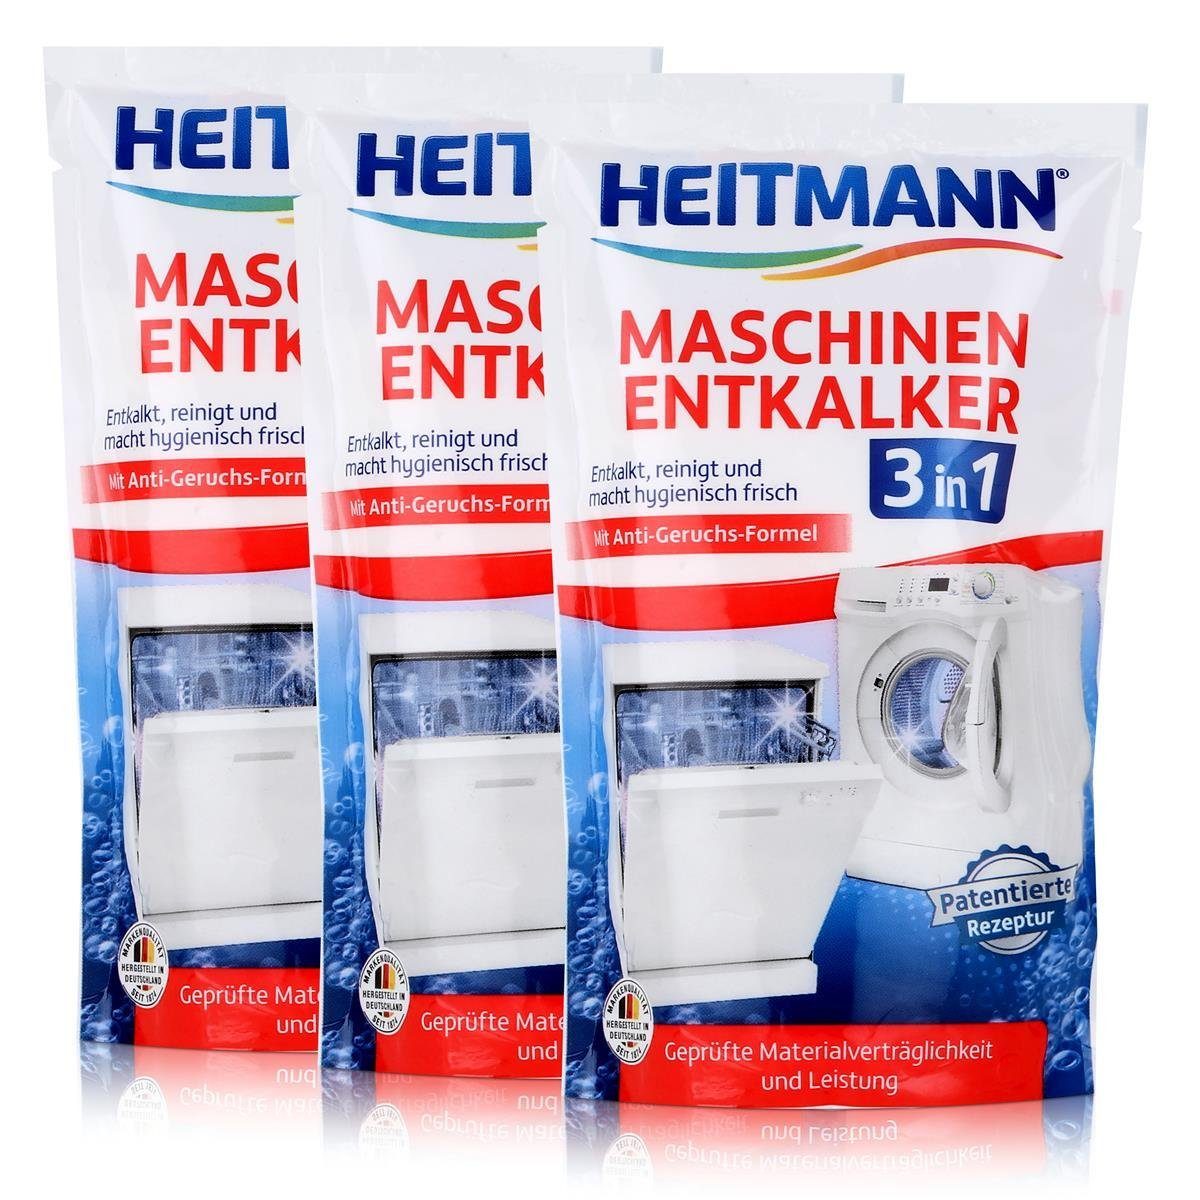 HEITMANN Heitmann Maschinen Entkalker 175g - Waschmaschinen und Geschirrspüler Spezialwaschmittel | Waschmittel